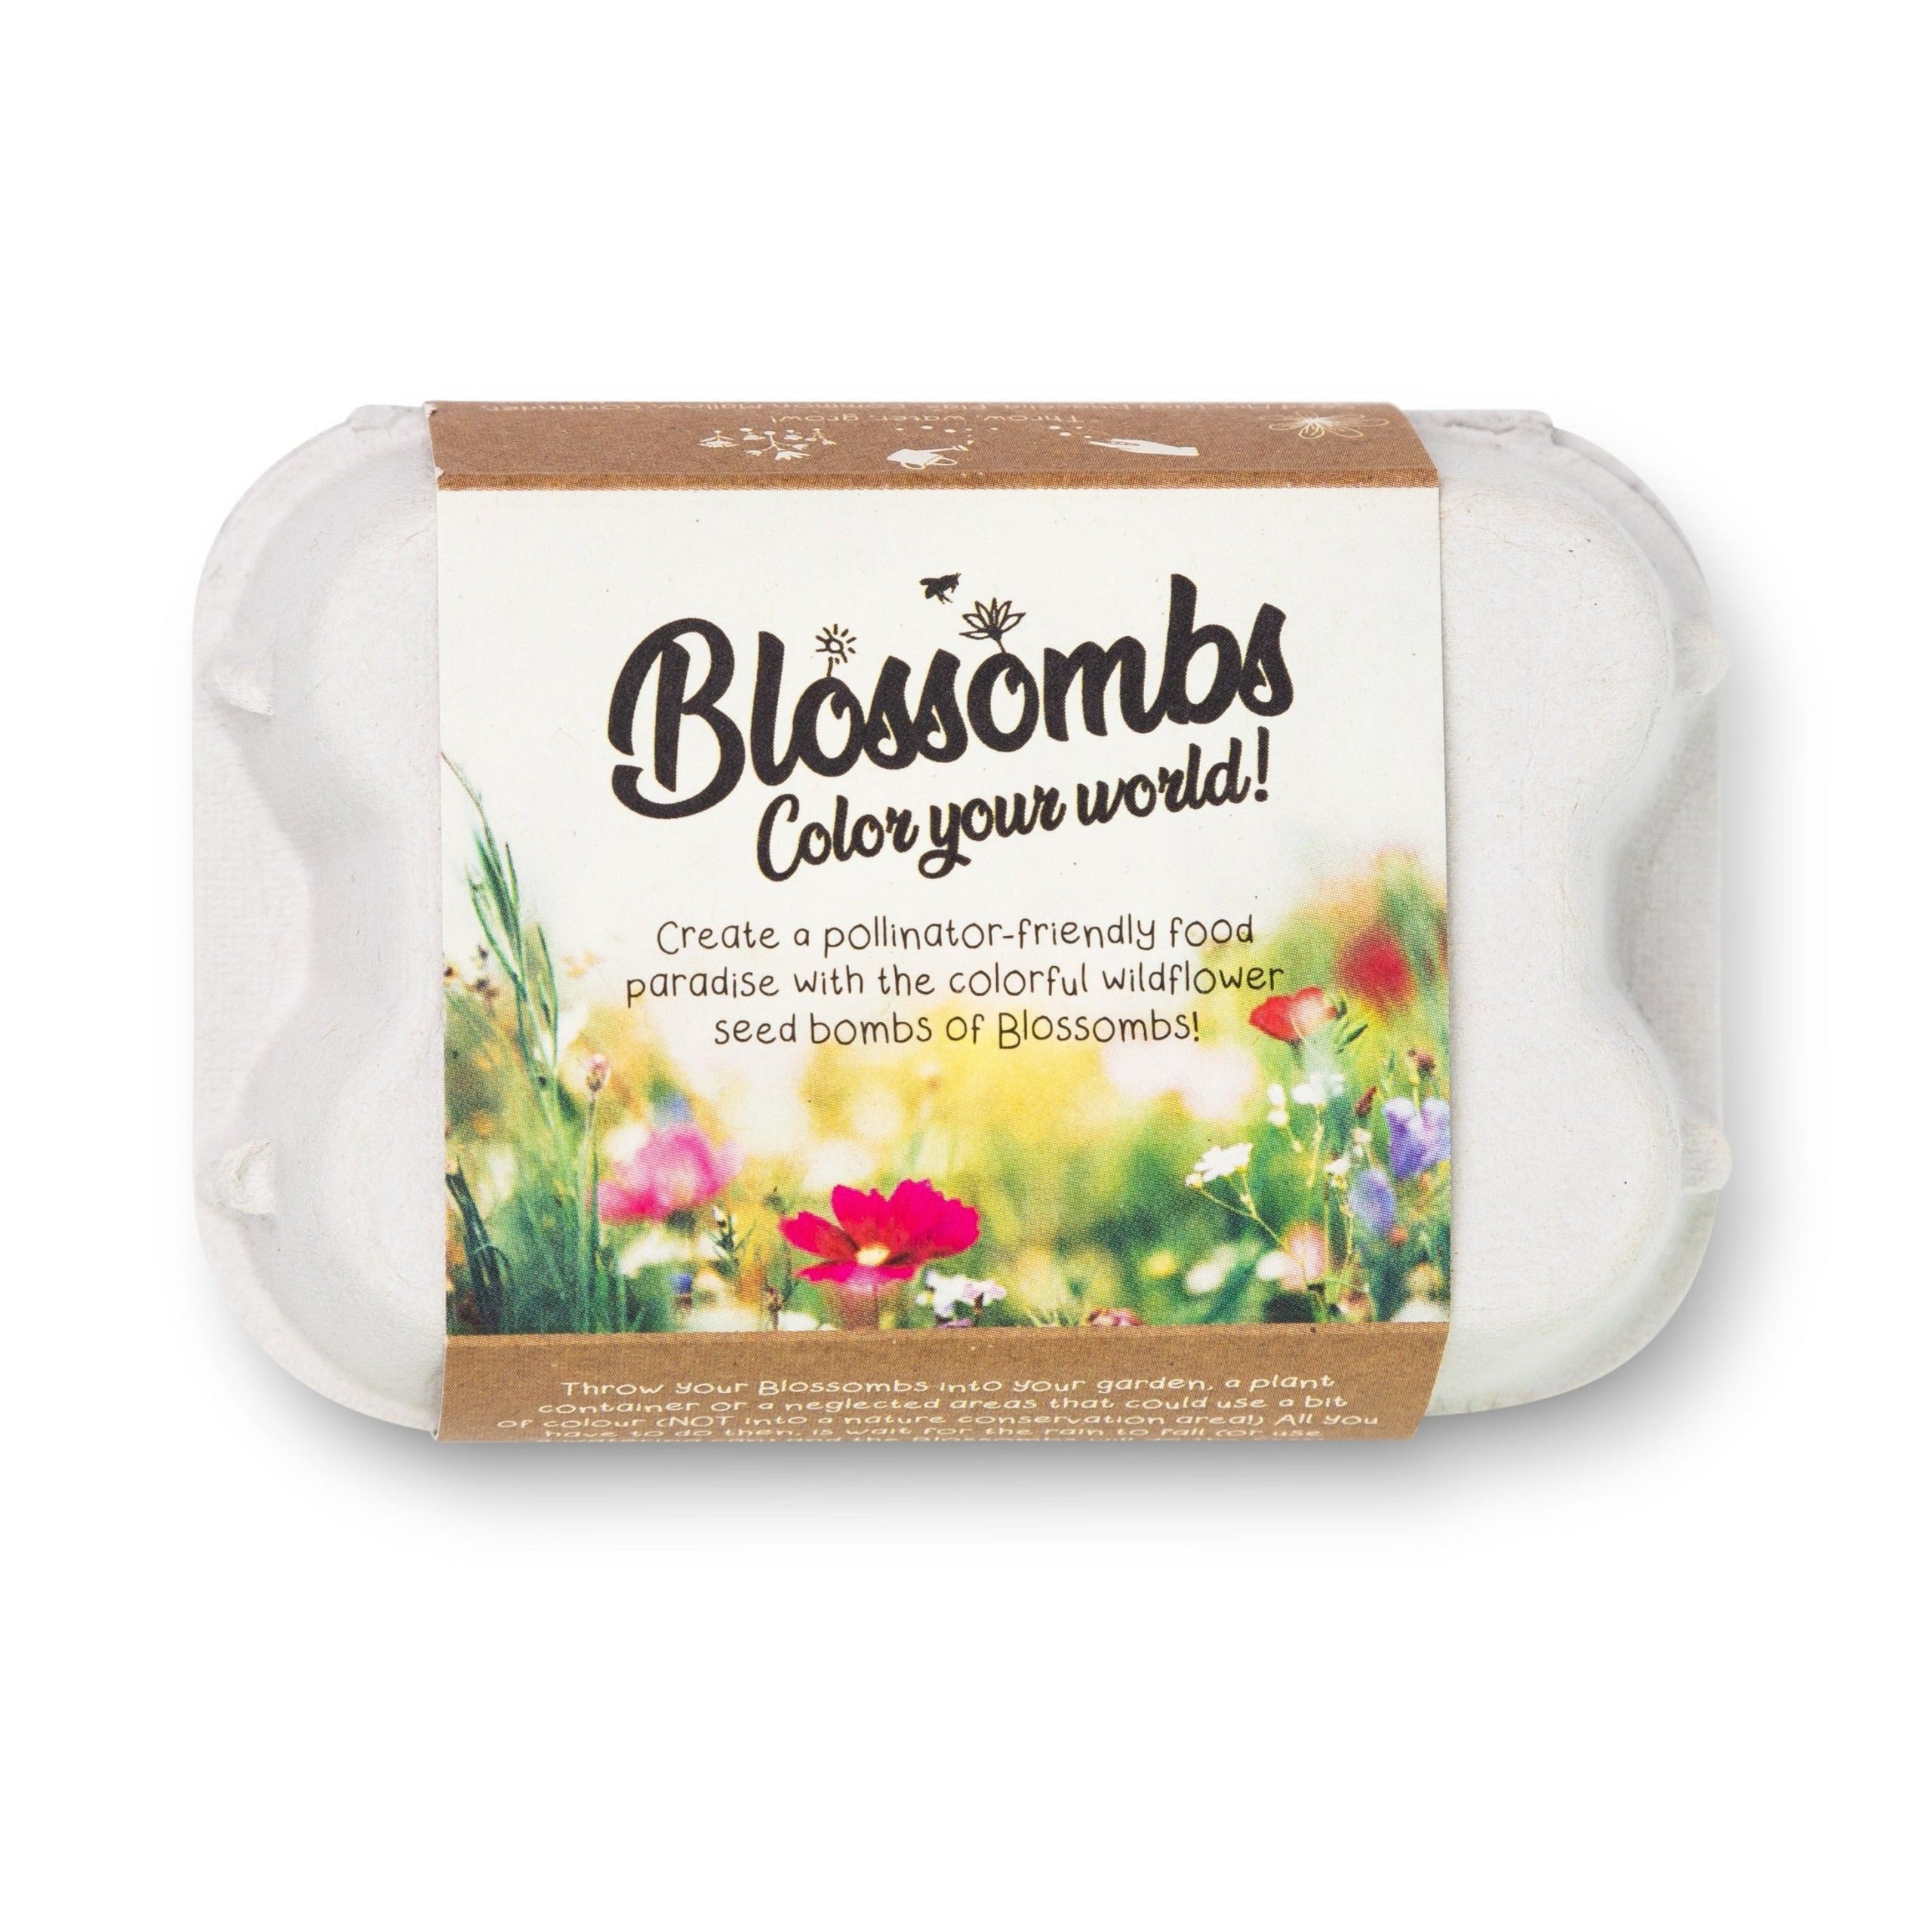 Blossombs Semínkové bomby - Dárkový box na vajíčka (6 ks) Blossombs